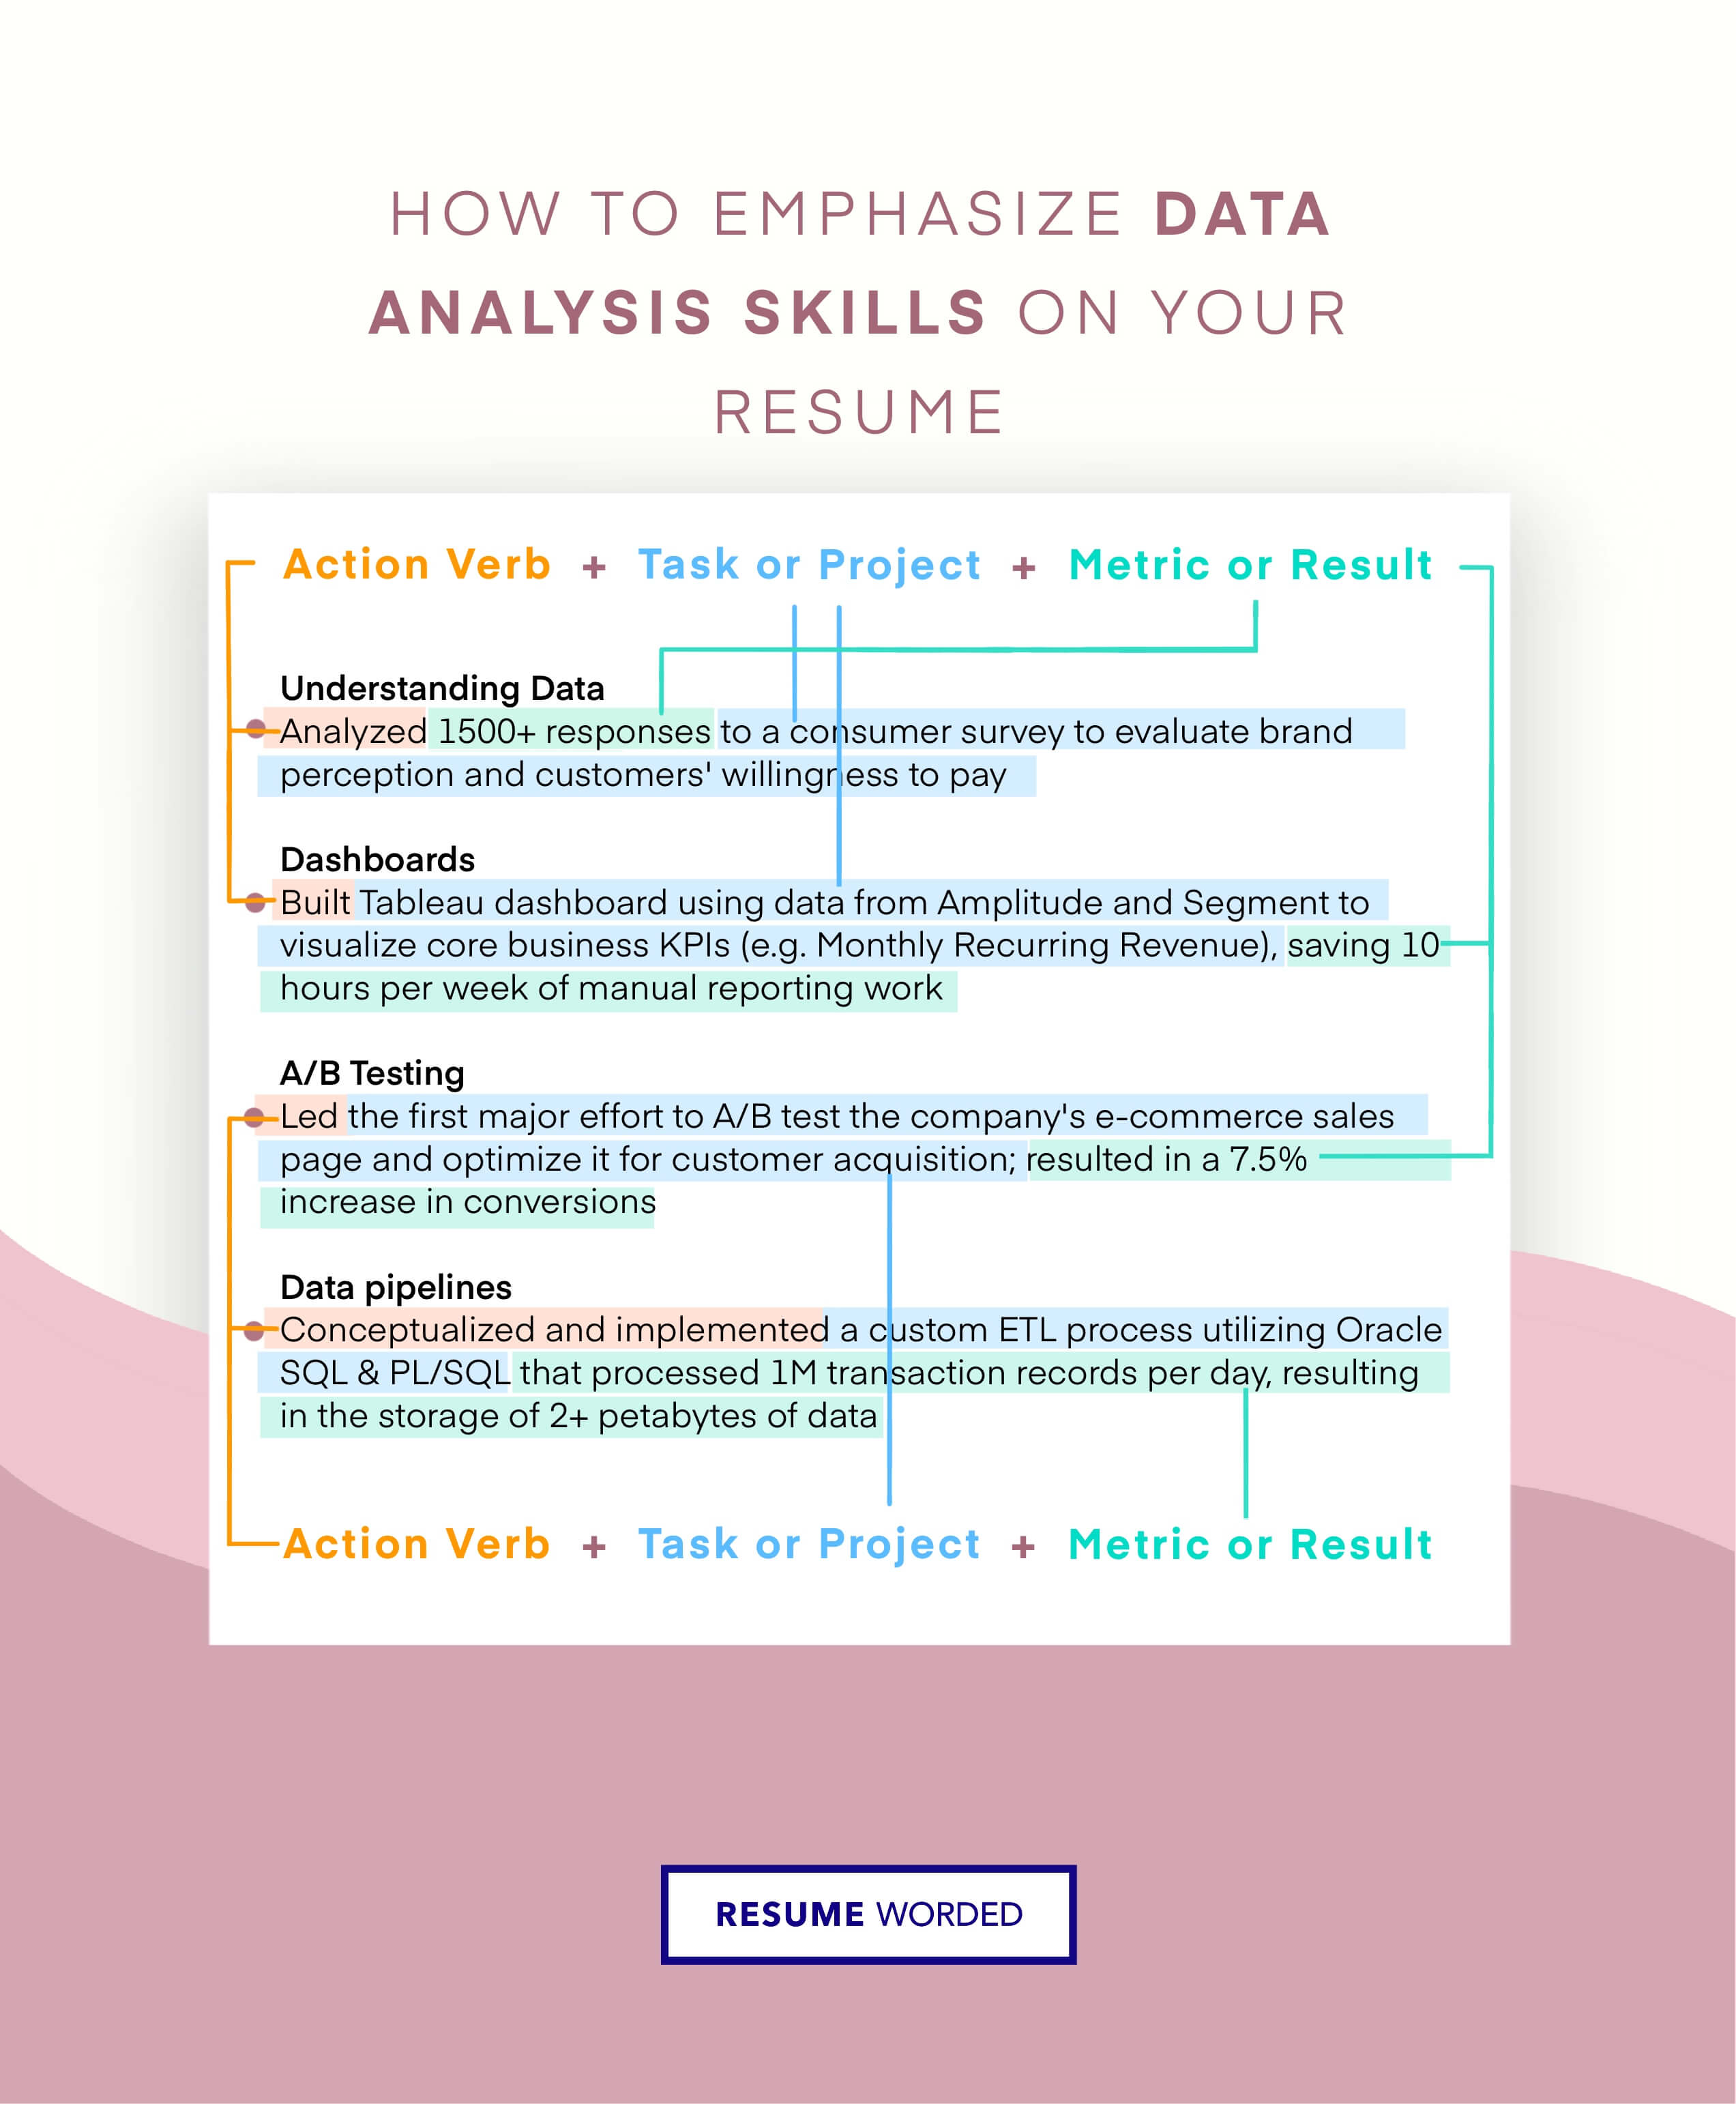 Strengthen the link between your data modeling career and educational background - Junior Data Modeler Resume